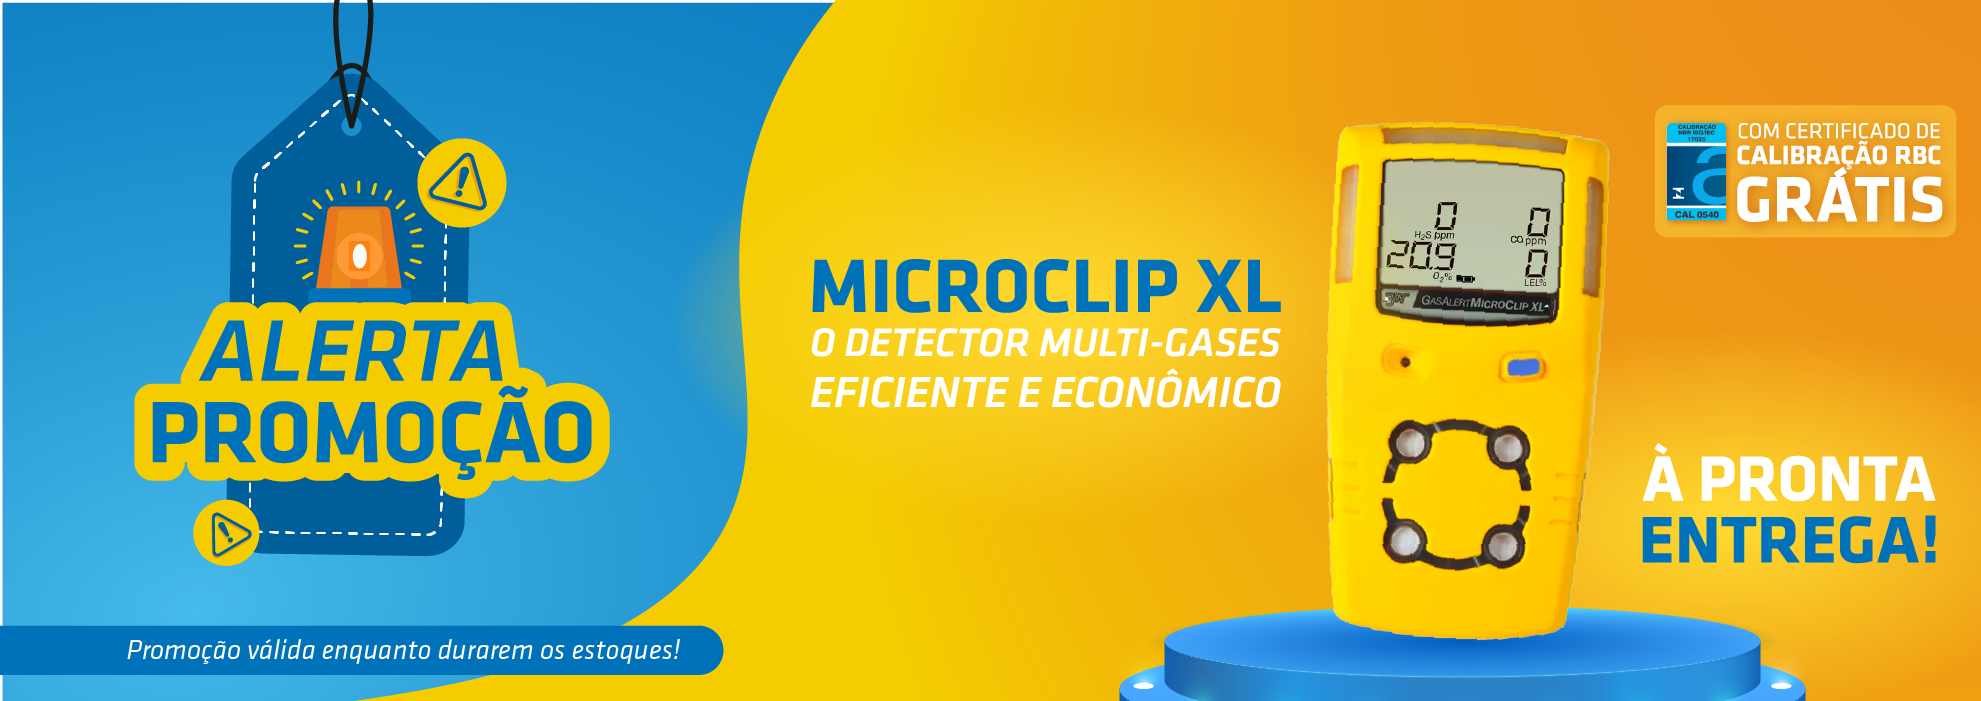 Promoção Microclip XL